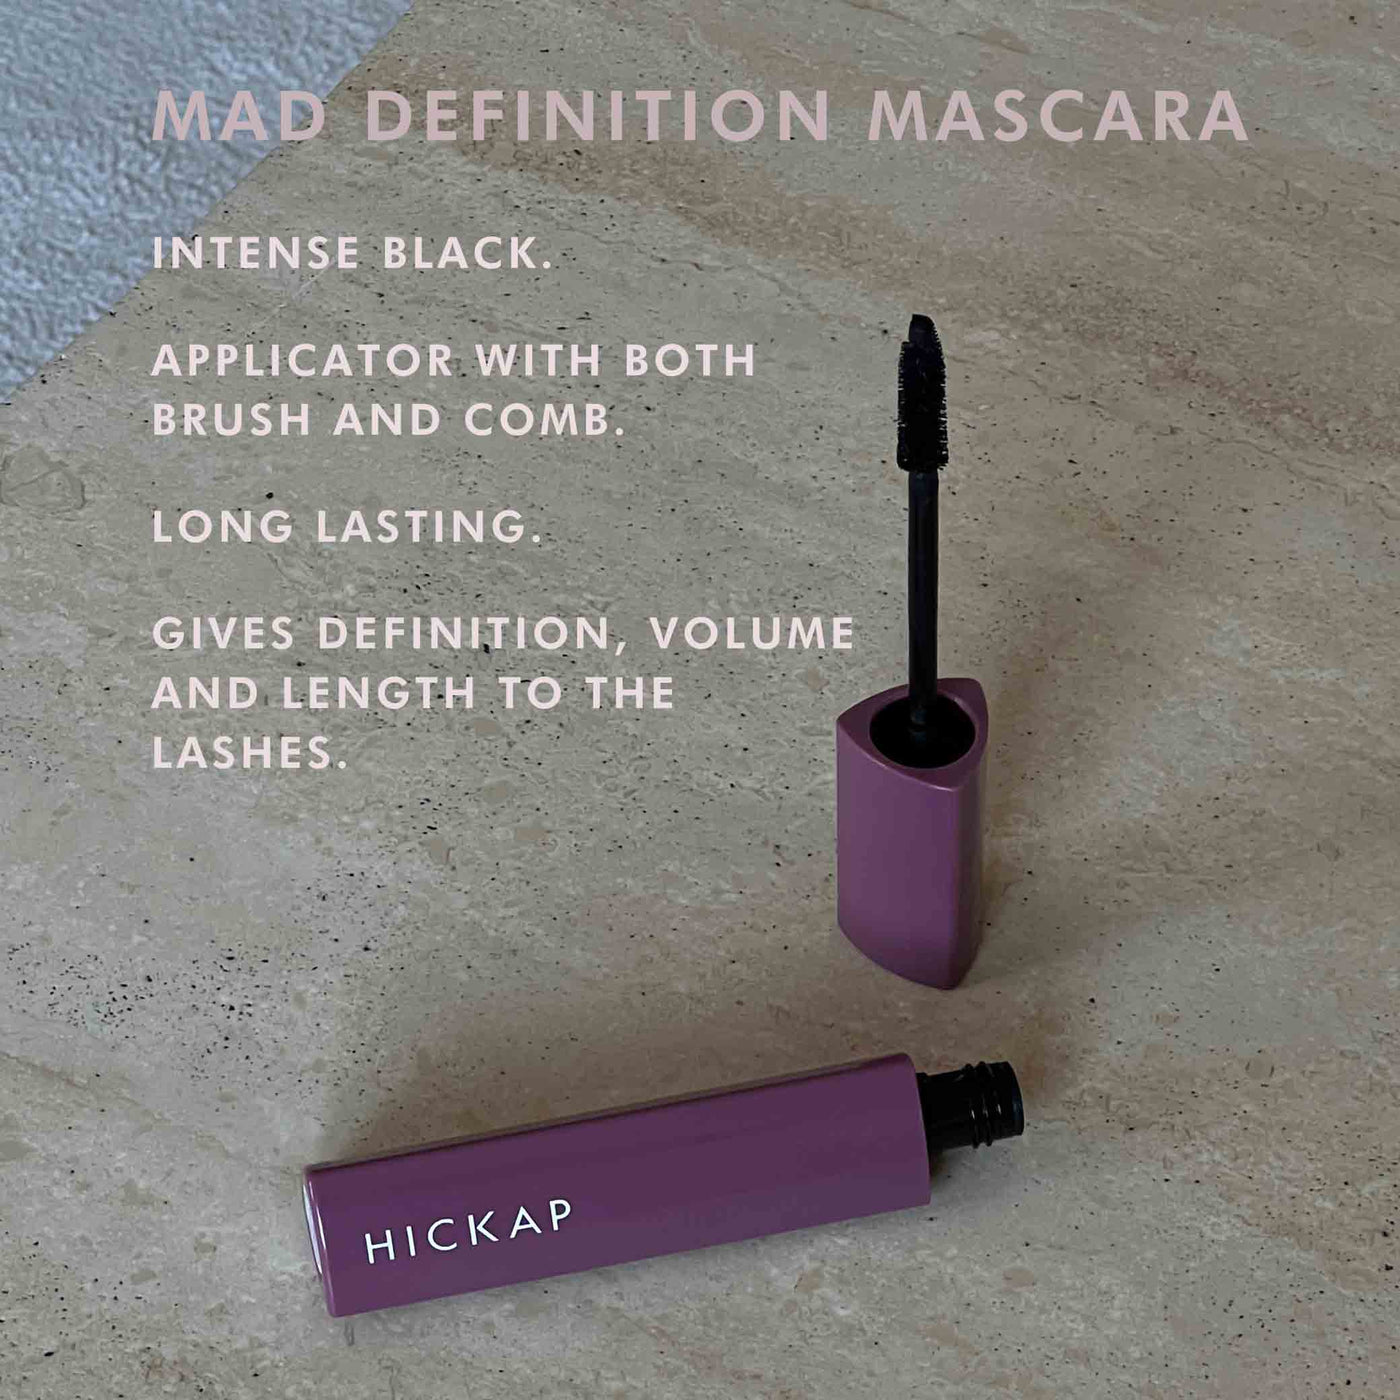 Mad Definition Mascara - Intense Black